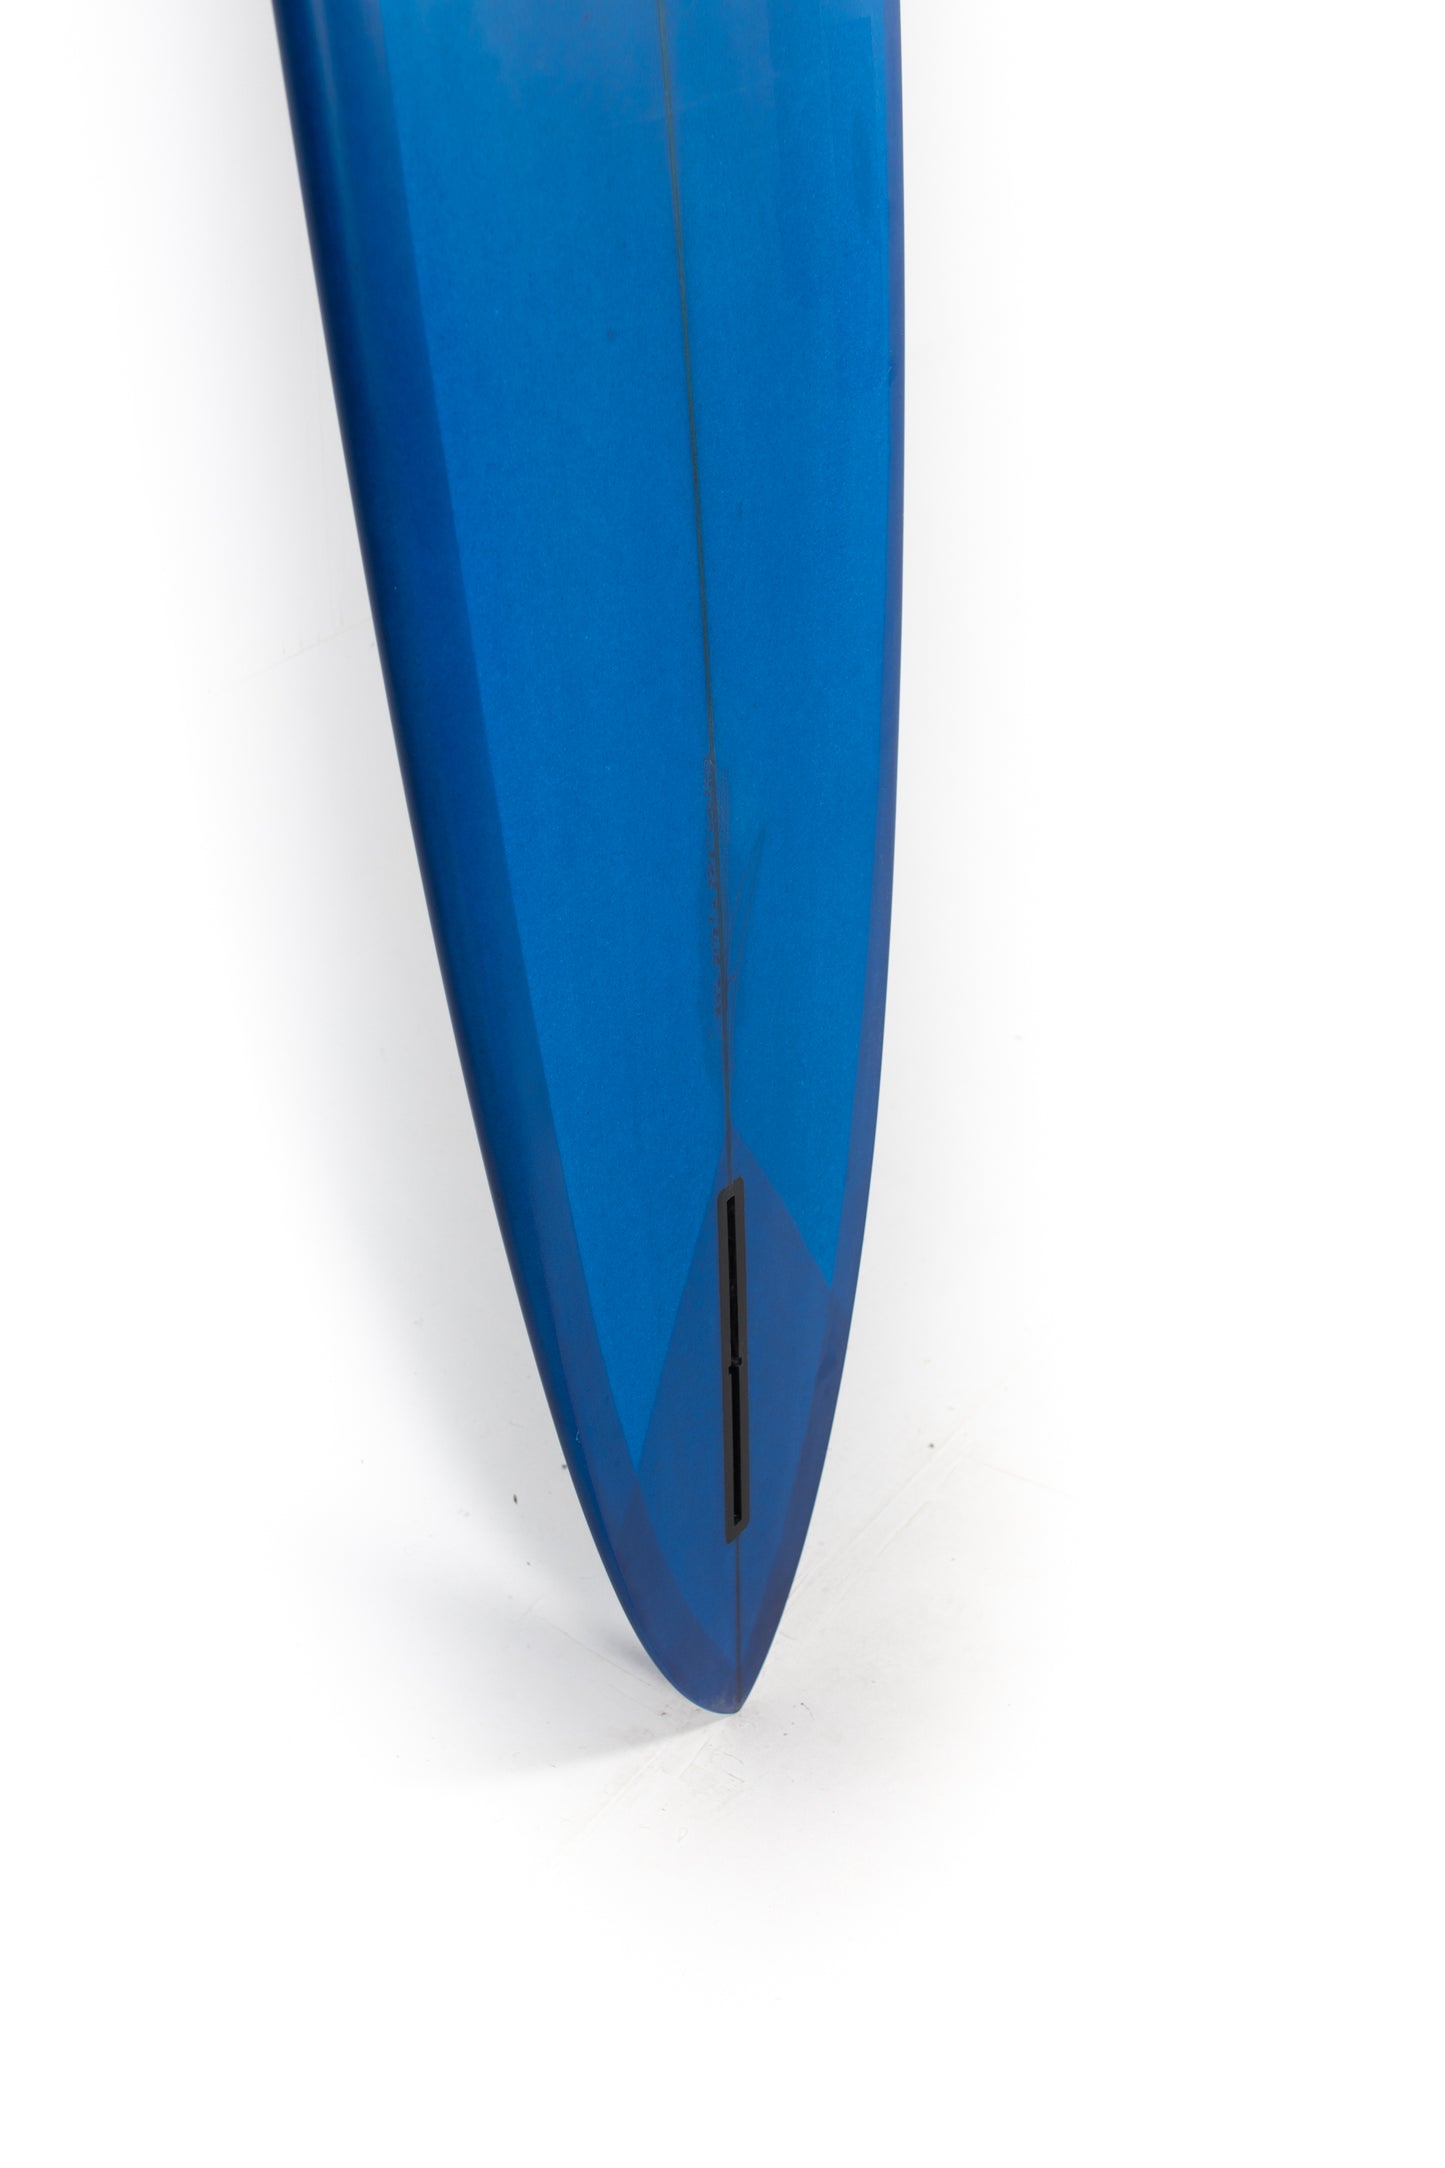 
                  
                    Pukas Surf Shop - Christenson Surfboards - C-BUCKET - 8'0" x 21 1/2 x 2 7/8 - CX03293
                  
                